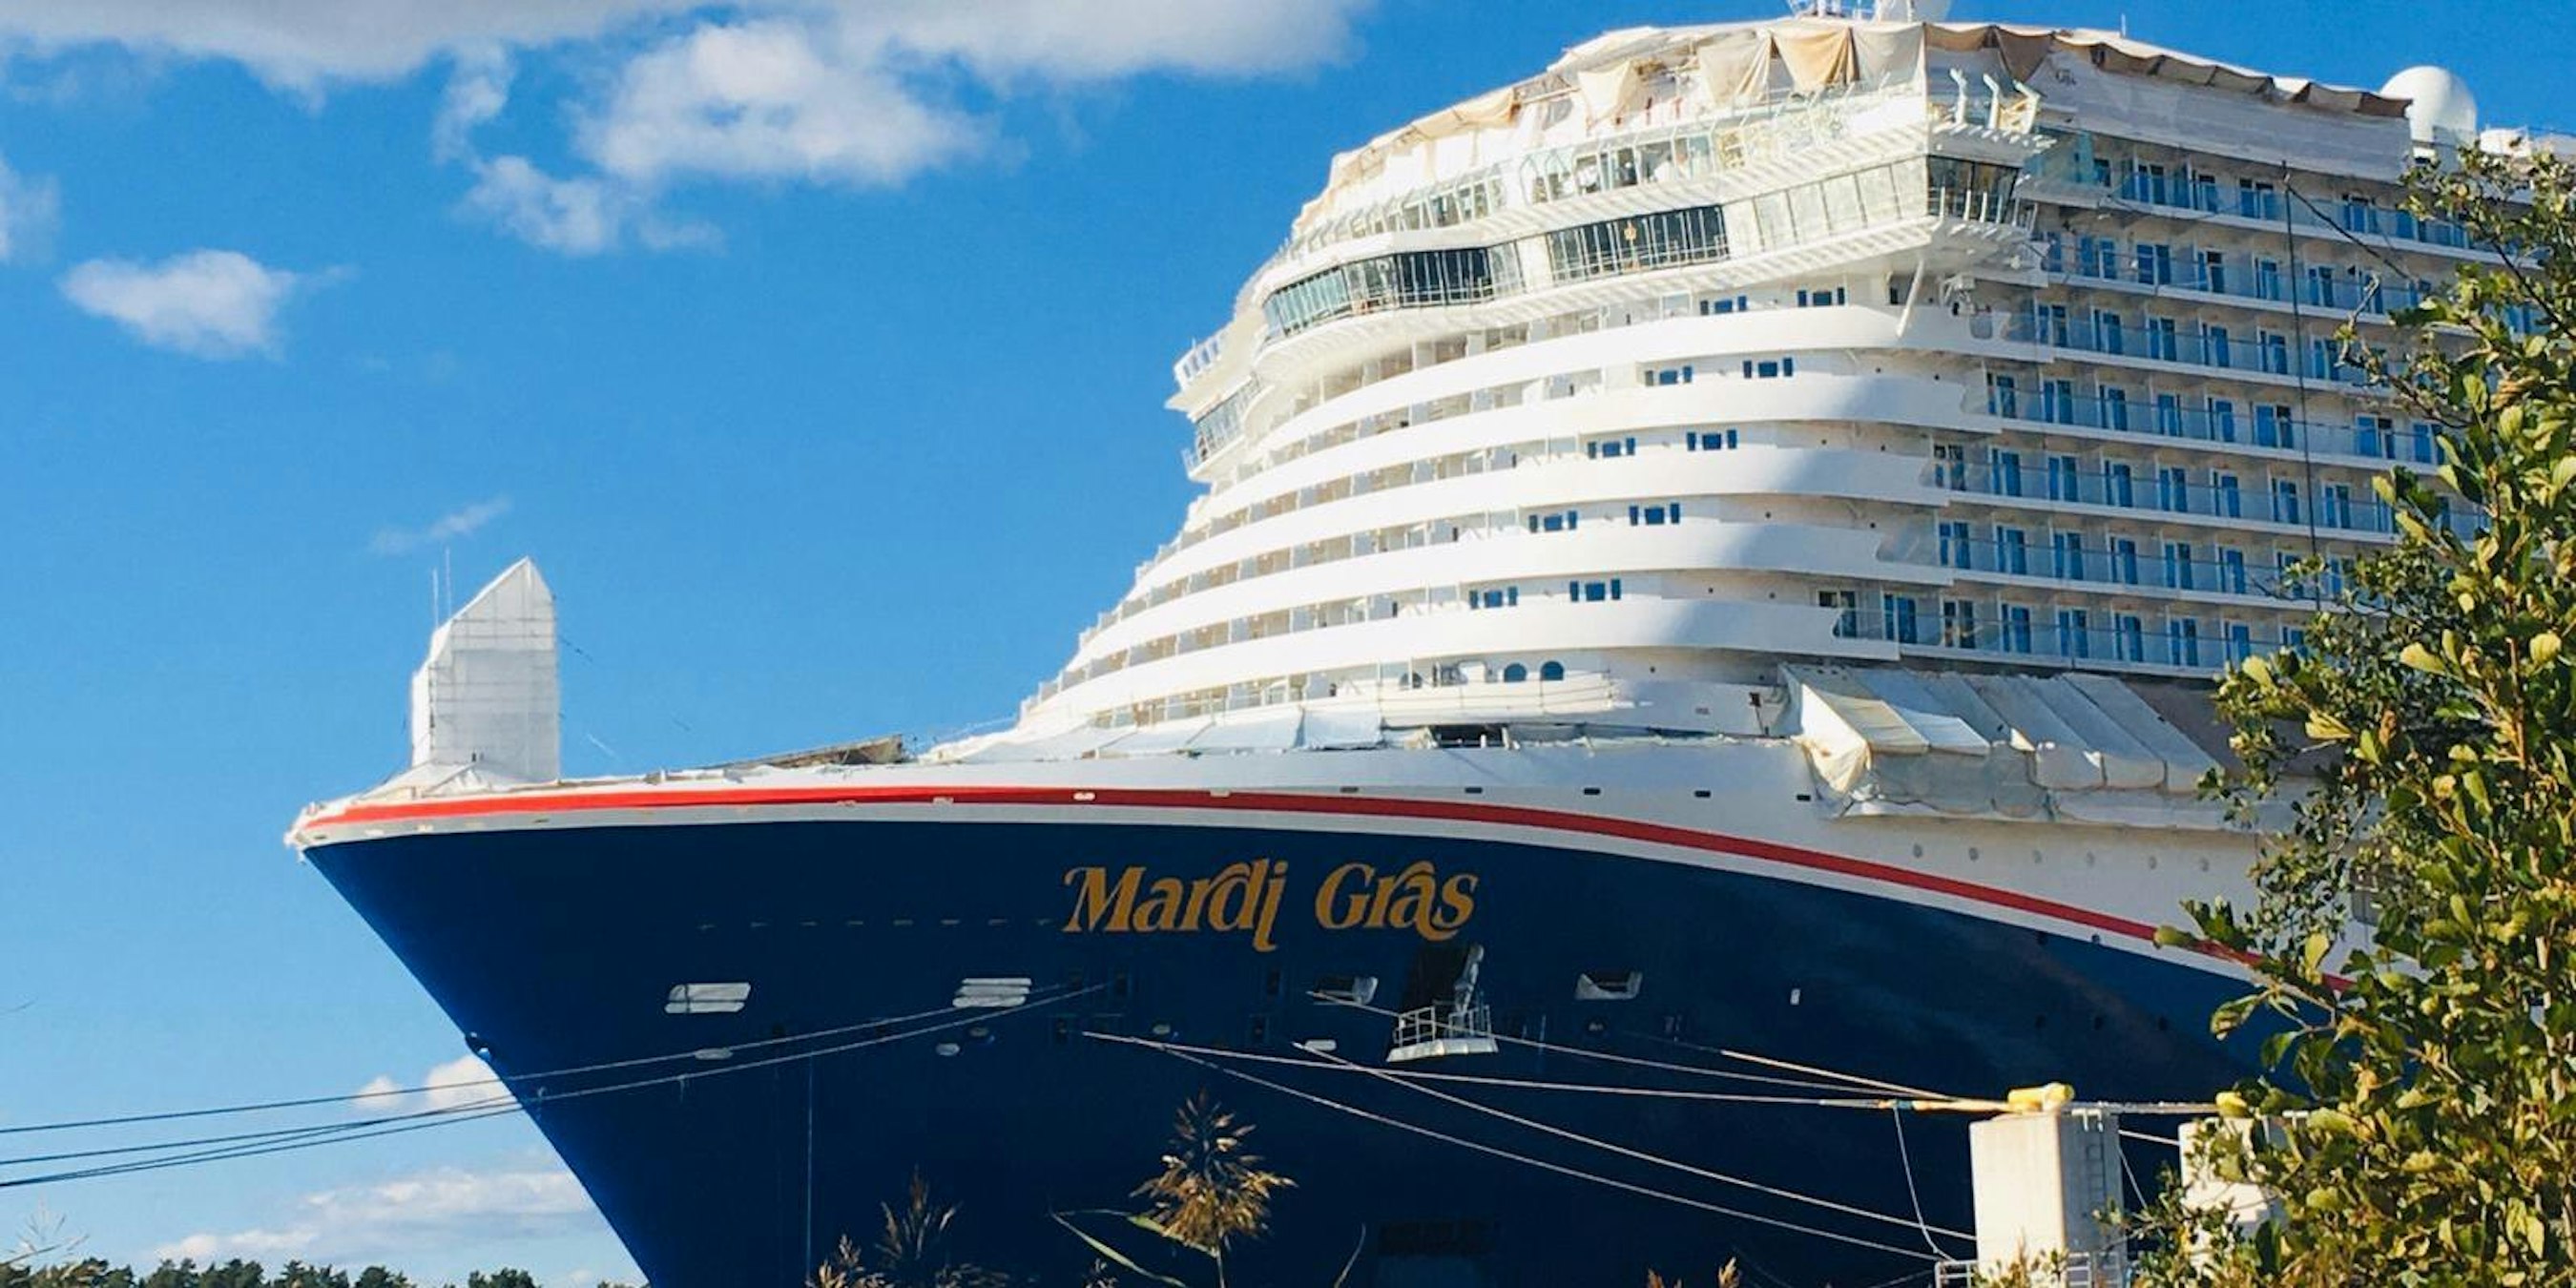 mardi gras cruise ship images